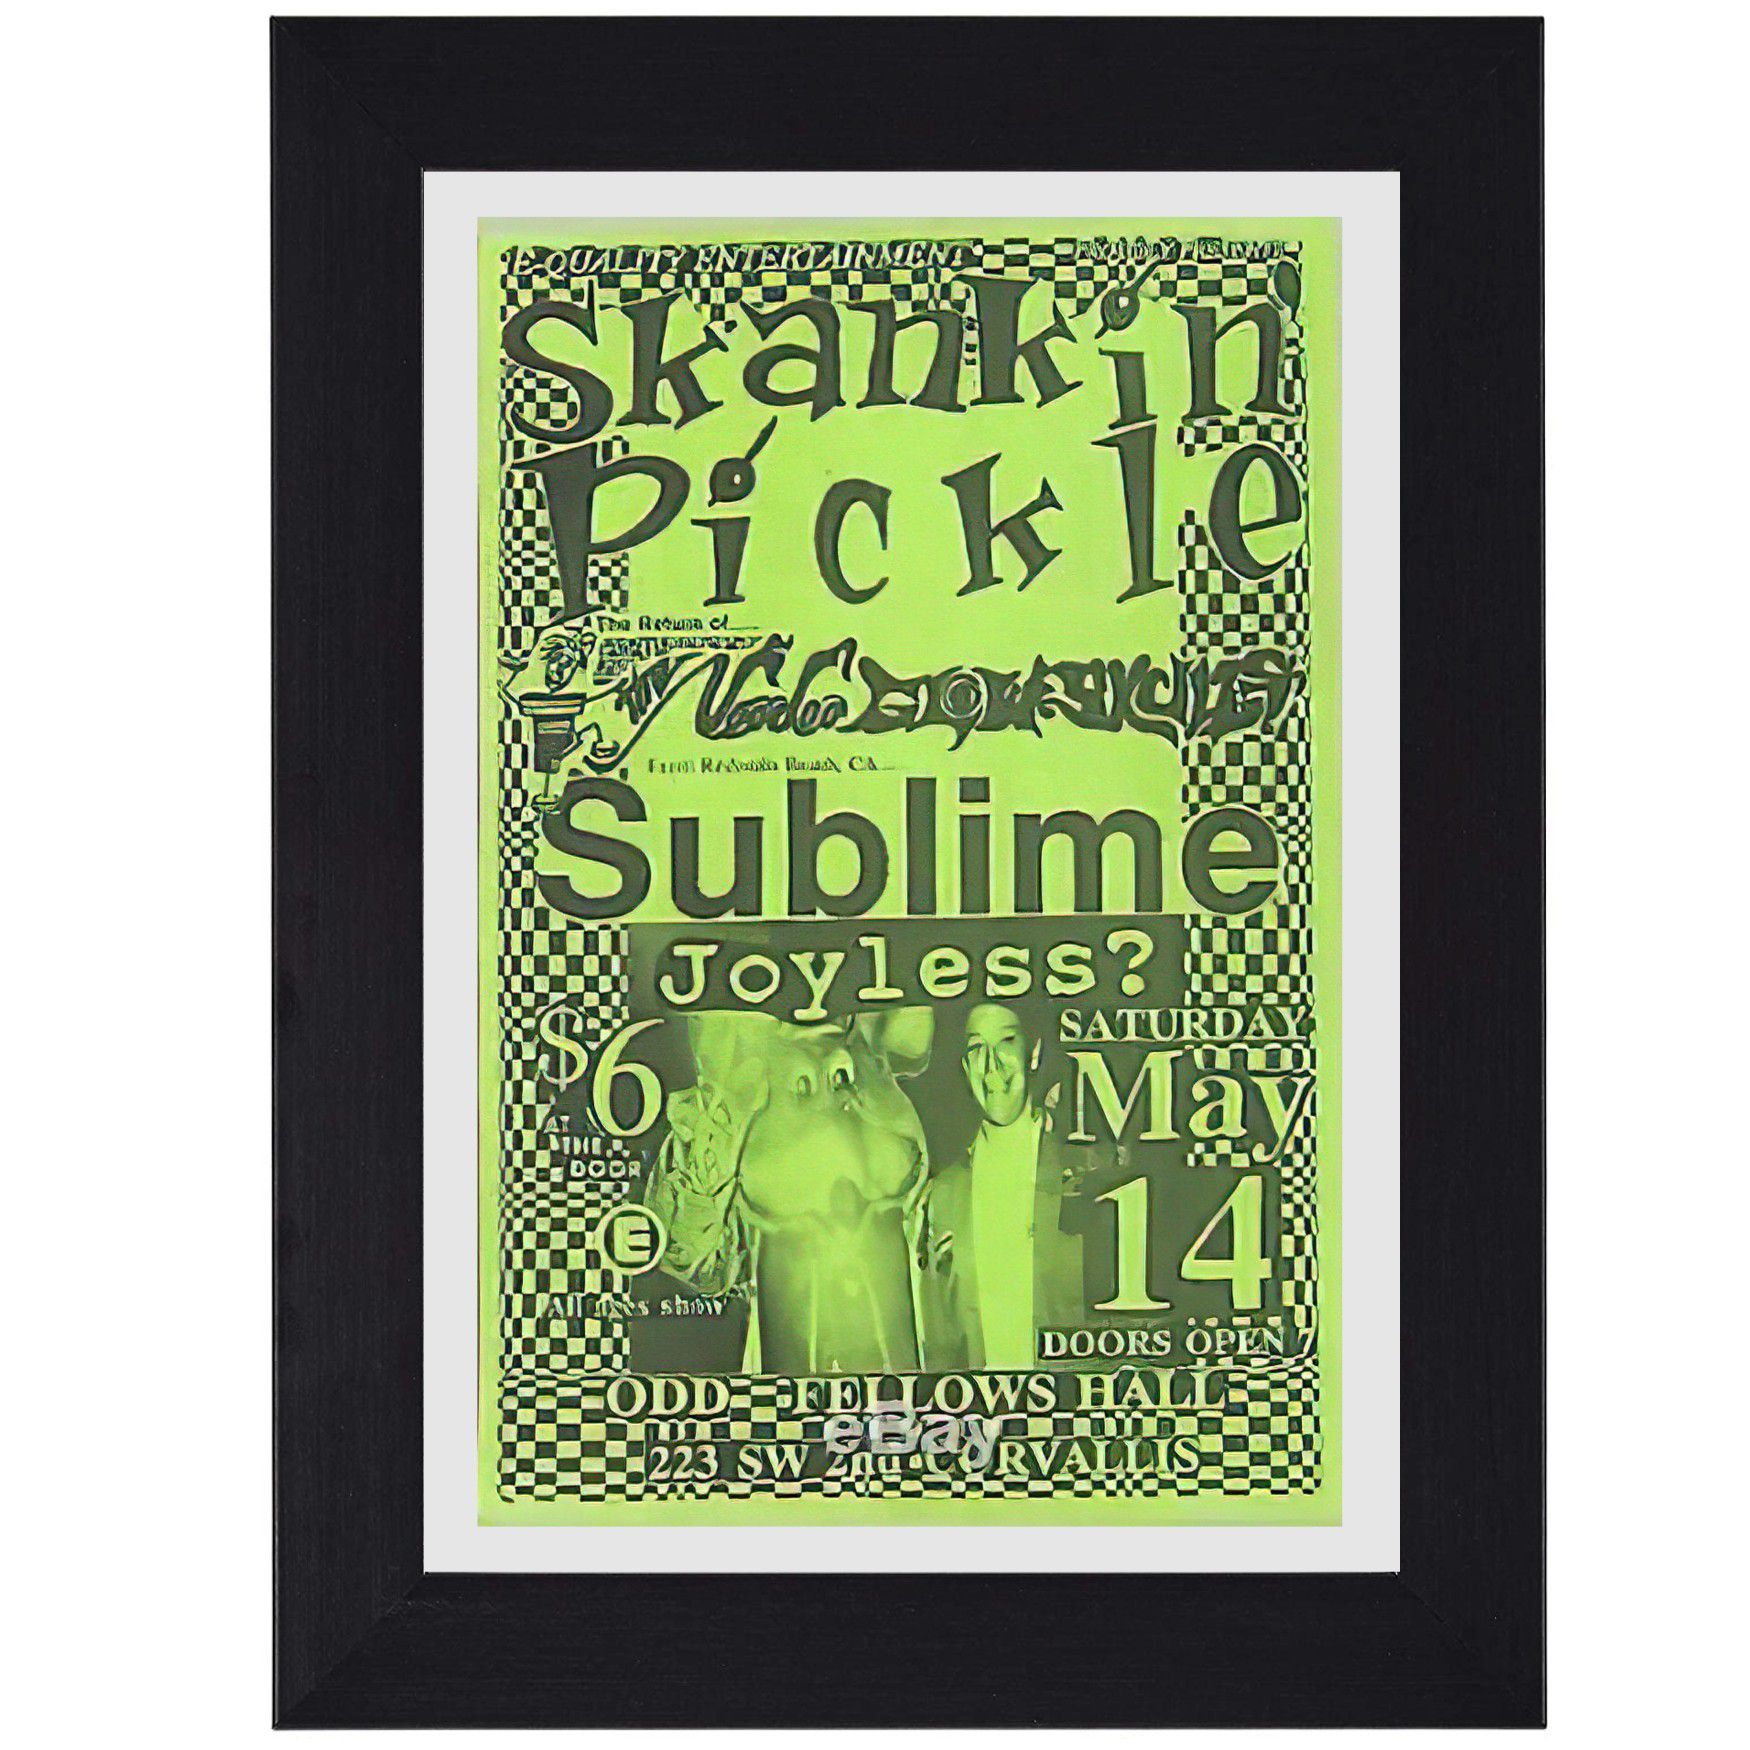 Sublime band Skankin pickle reggae punk Rock print mini concert poster flyer music